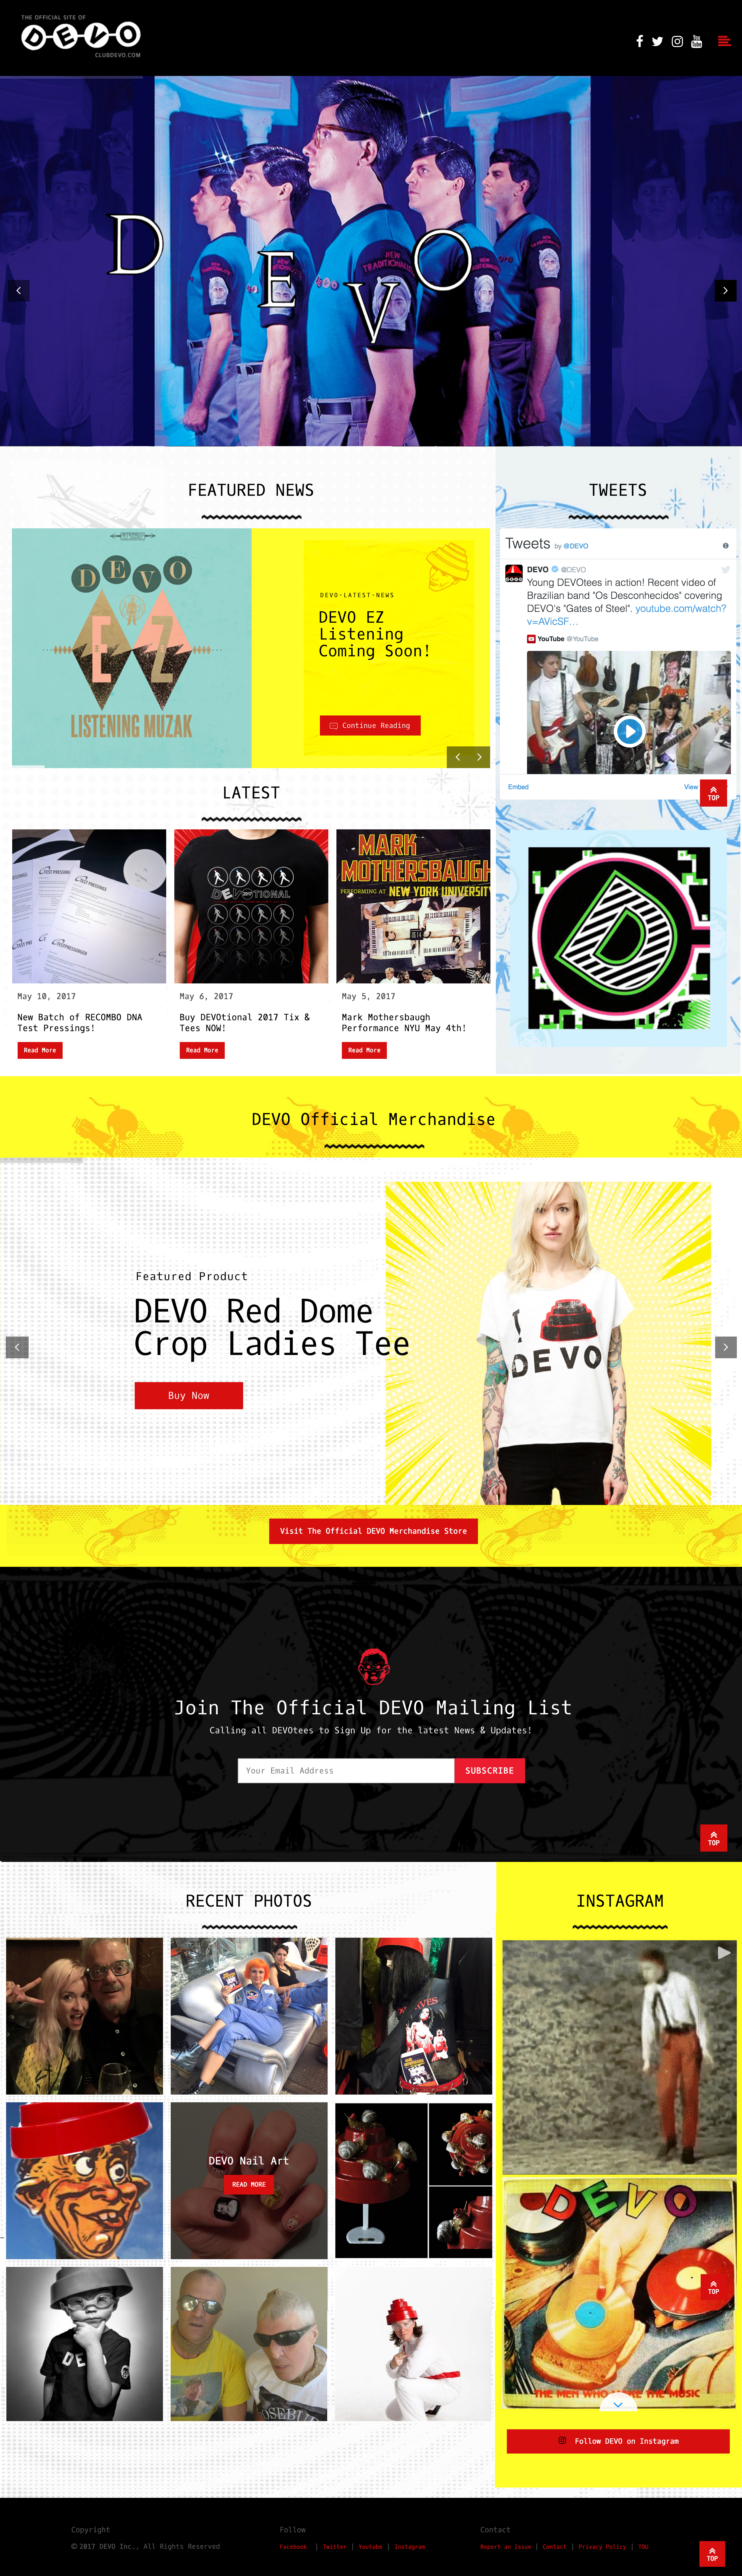 devo-homepage